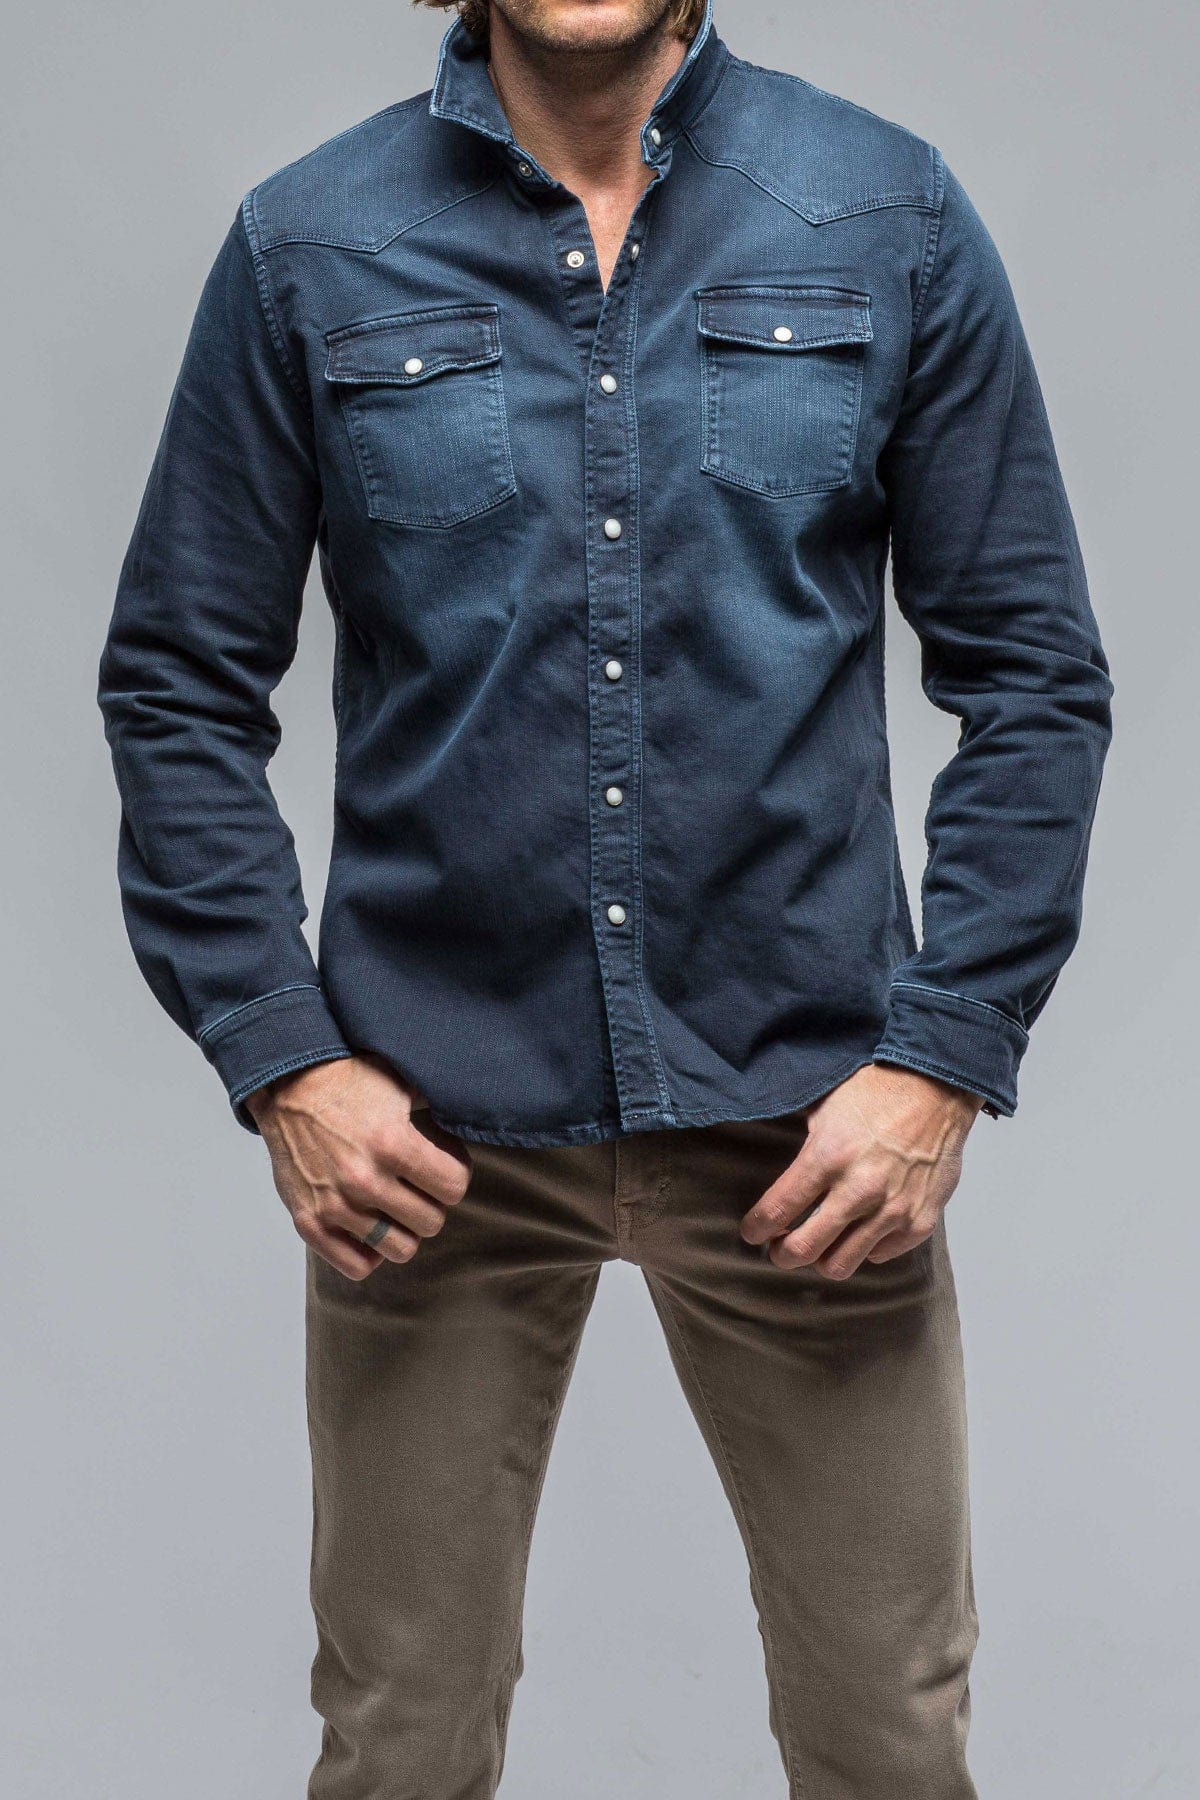 Ranger Colored Denim Snap Shirt In Blue Navy - AXEL'S